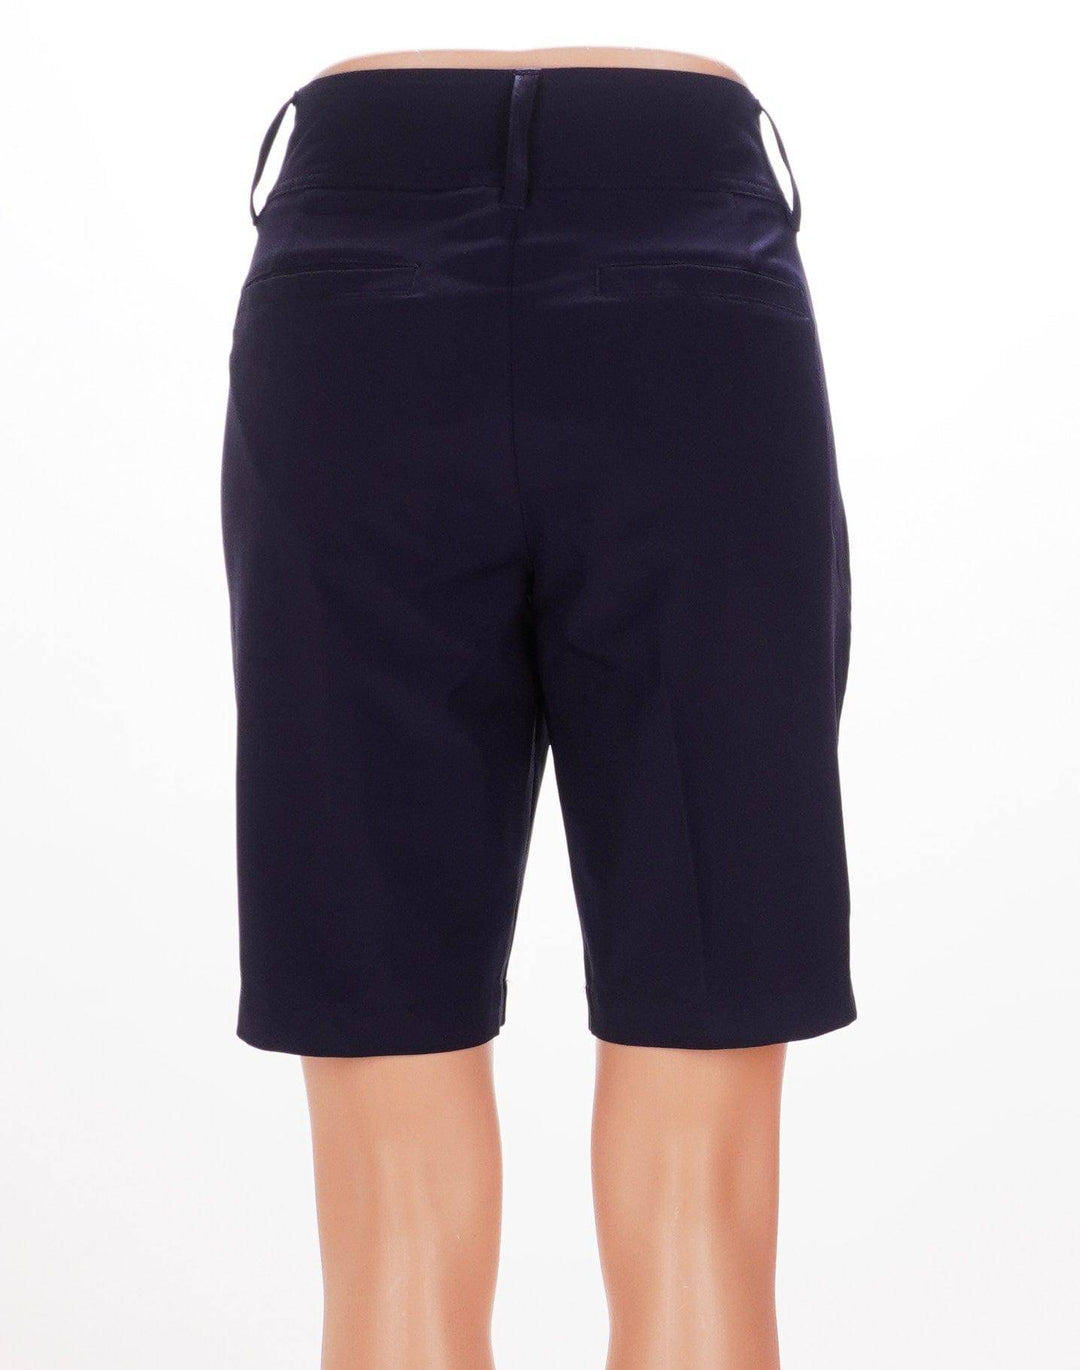 GGblue 6 / Navy / Consigned GG Blue Golf Shorts - Navy - Size 6